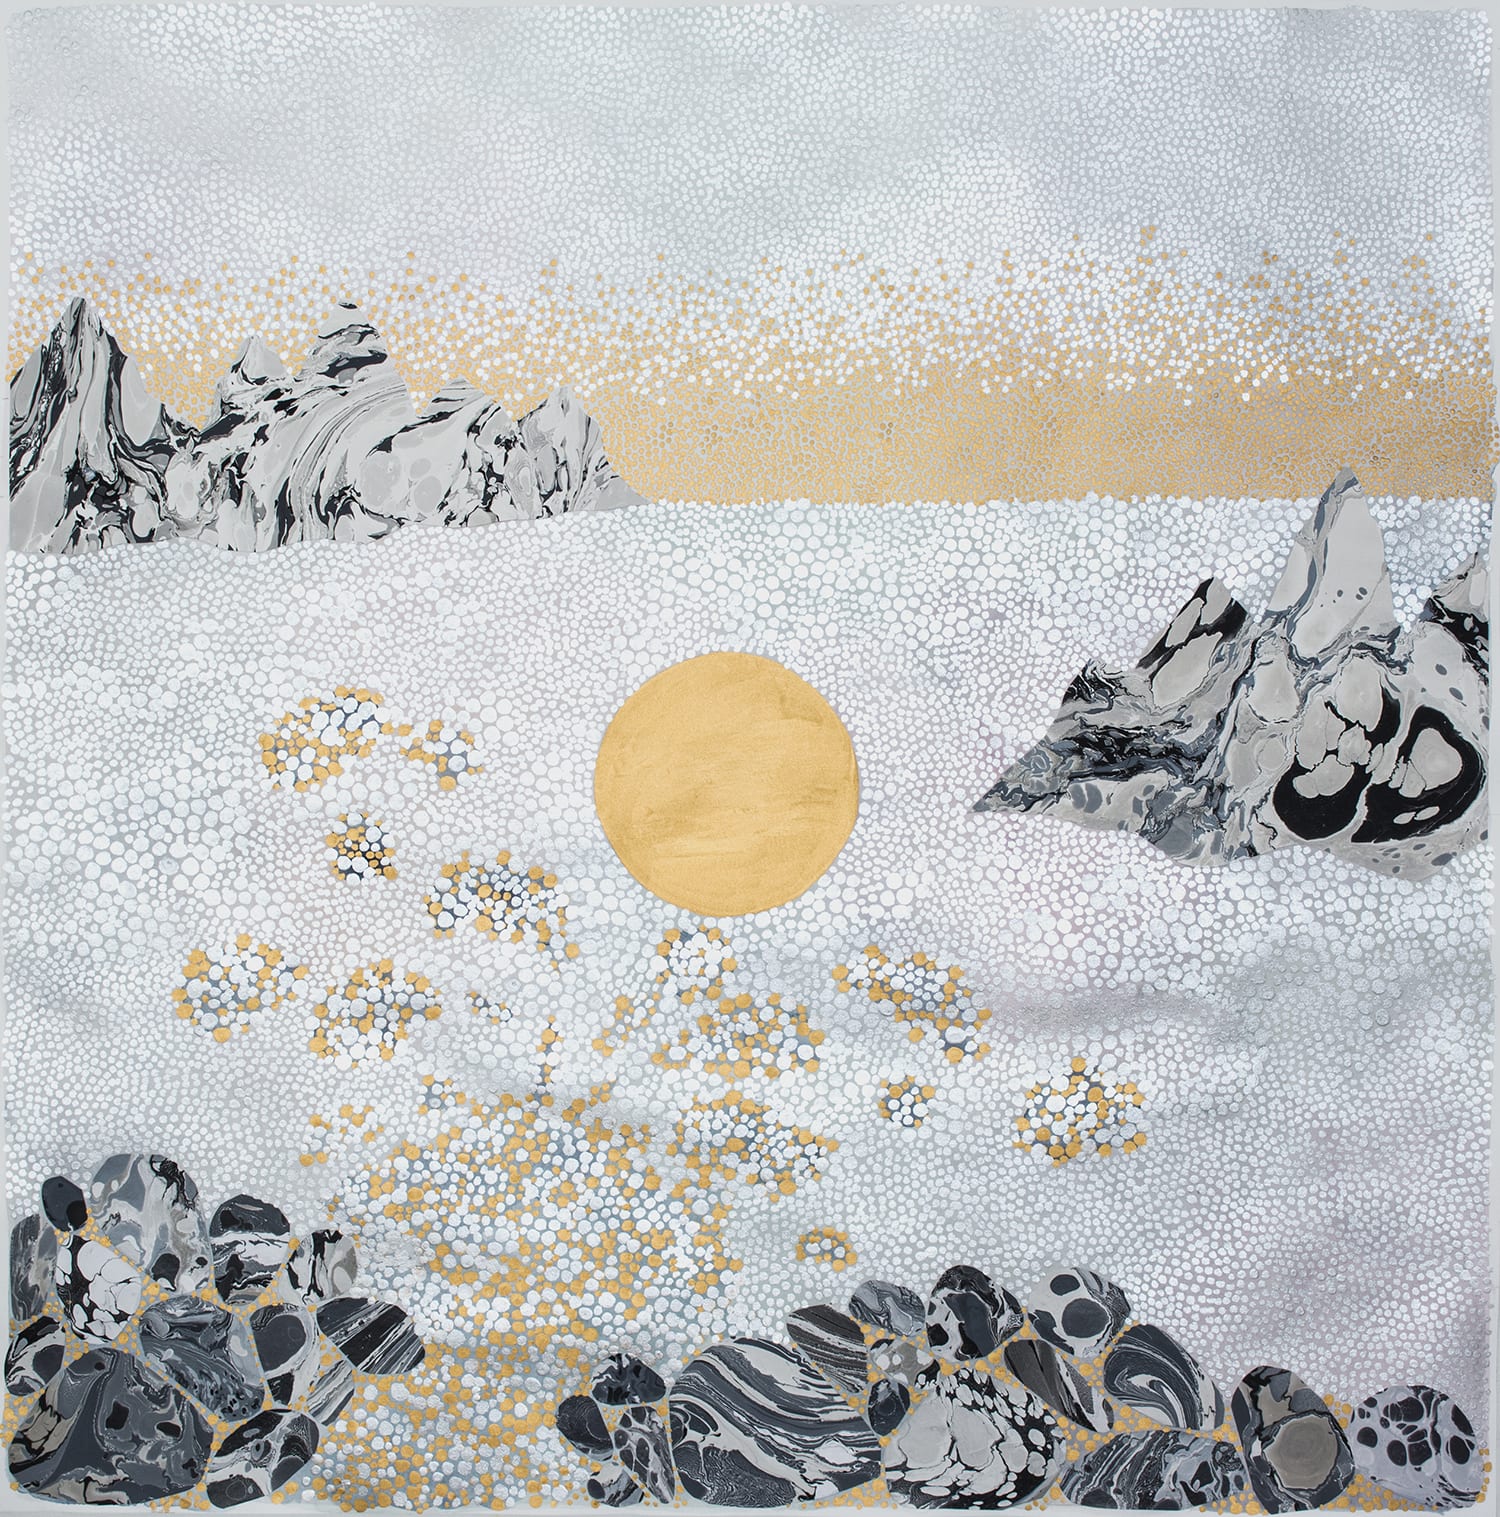 Crystal Liu, in dreams, “within reach”, 2017